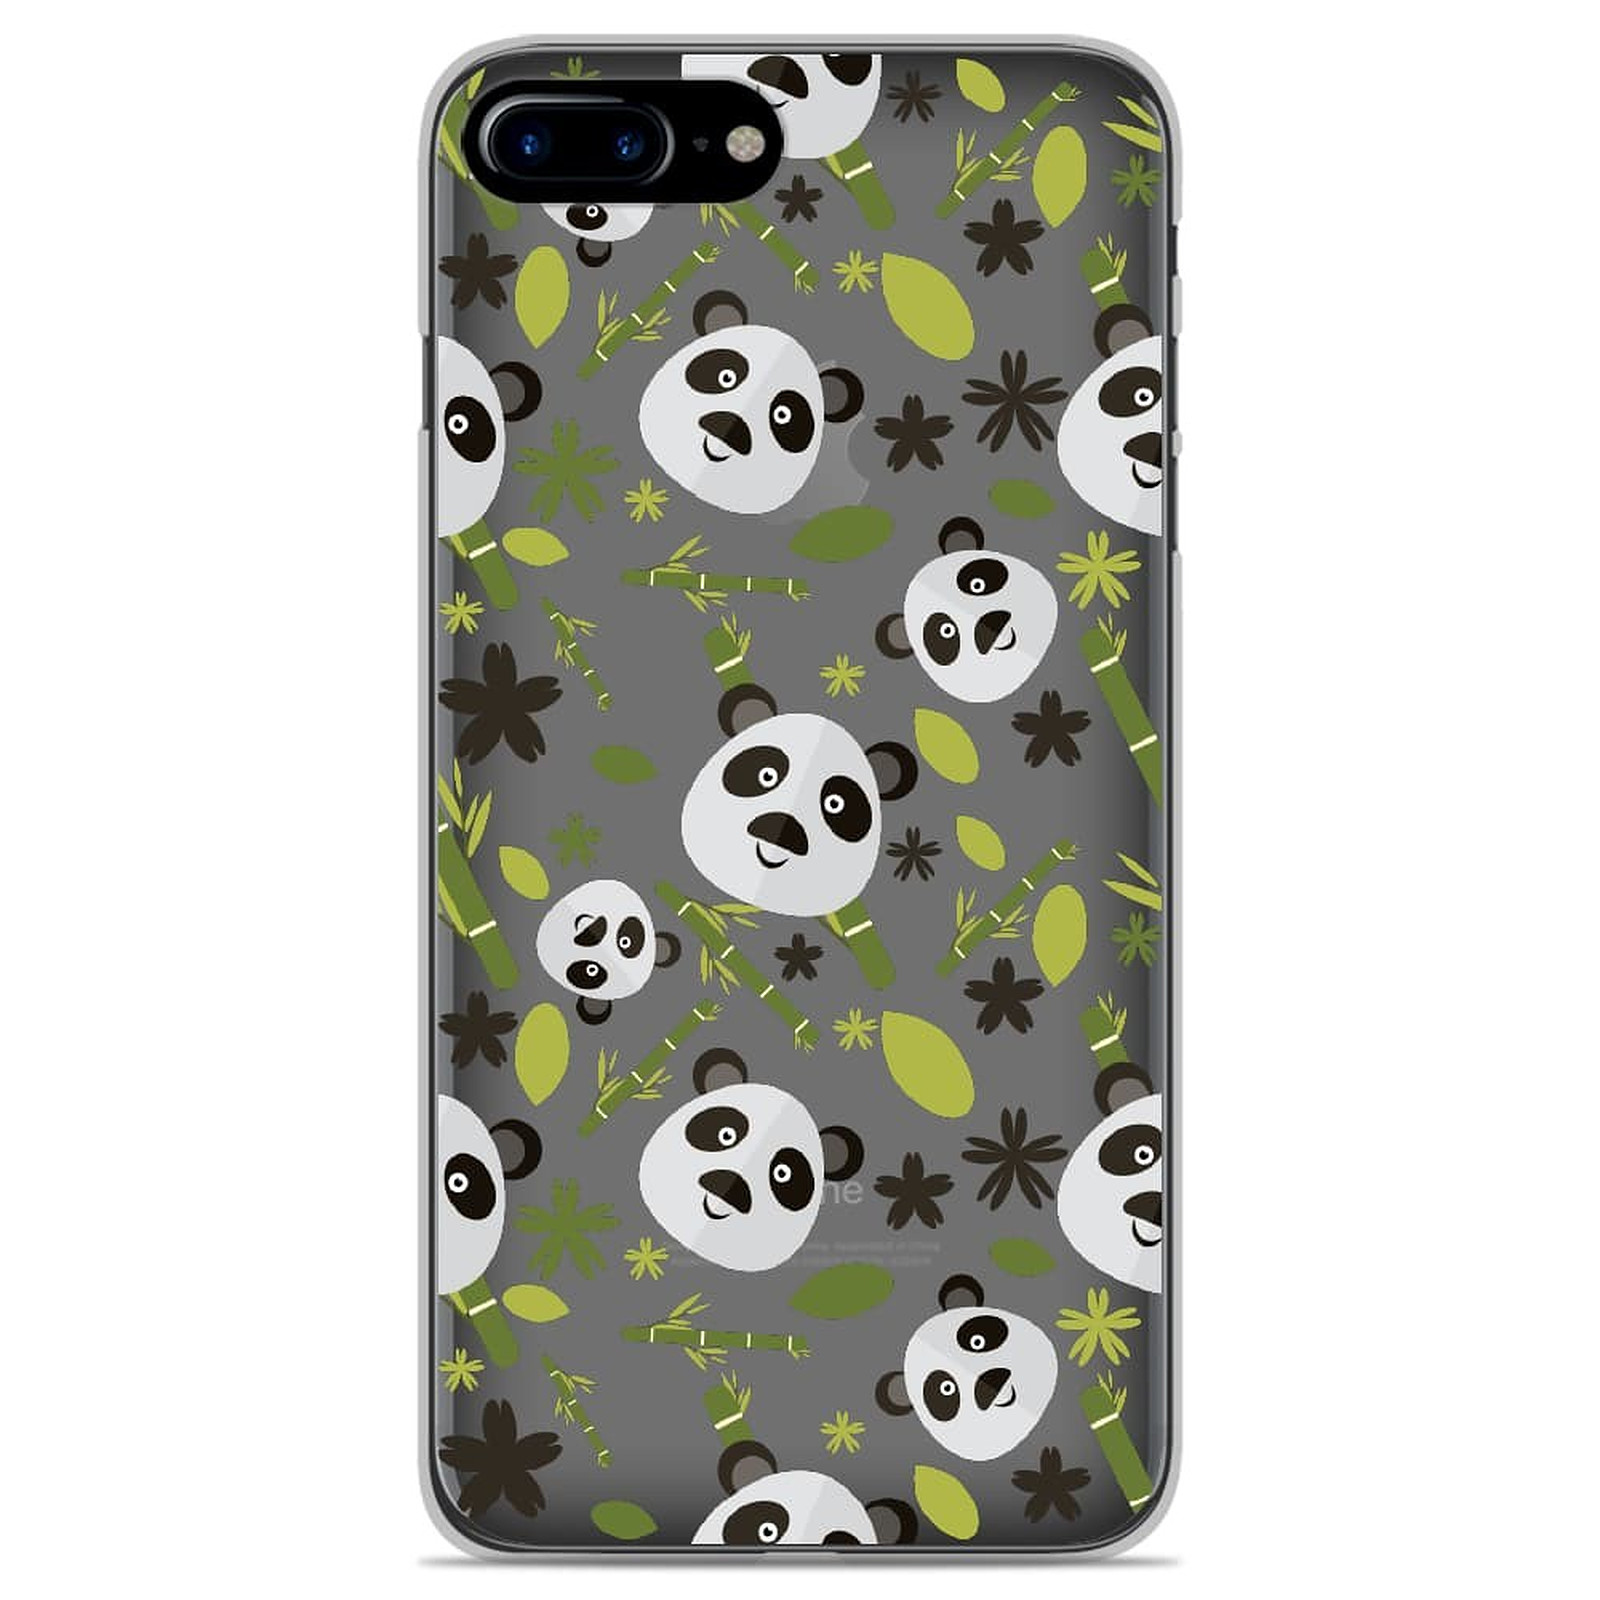 1001 Coques Coque silicone gel Apple iPhone 8 Plus motif Pandas et Bambou - Coque telephone 1001Coques